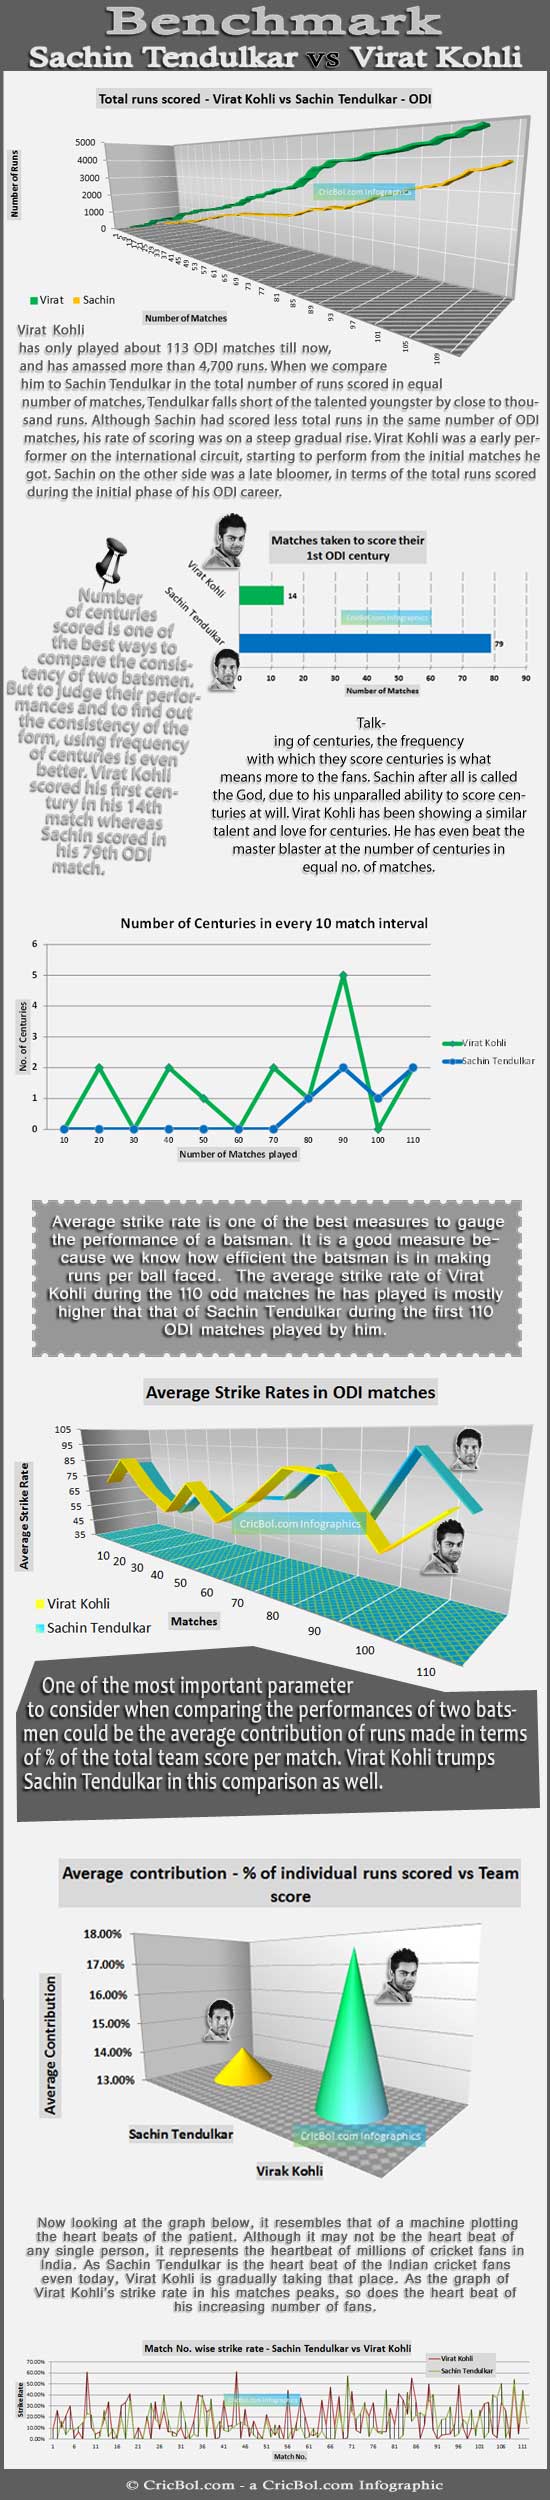 Benchmark - ODI batting performances of Sachin Tendulkar and Virat Kohli - Infographic